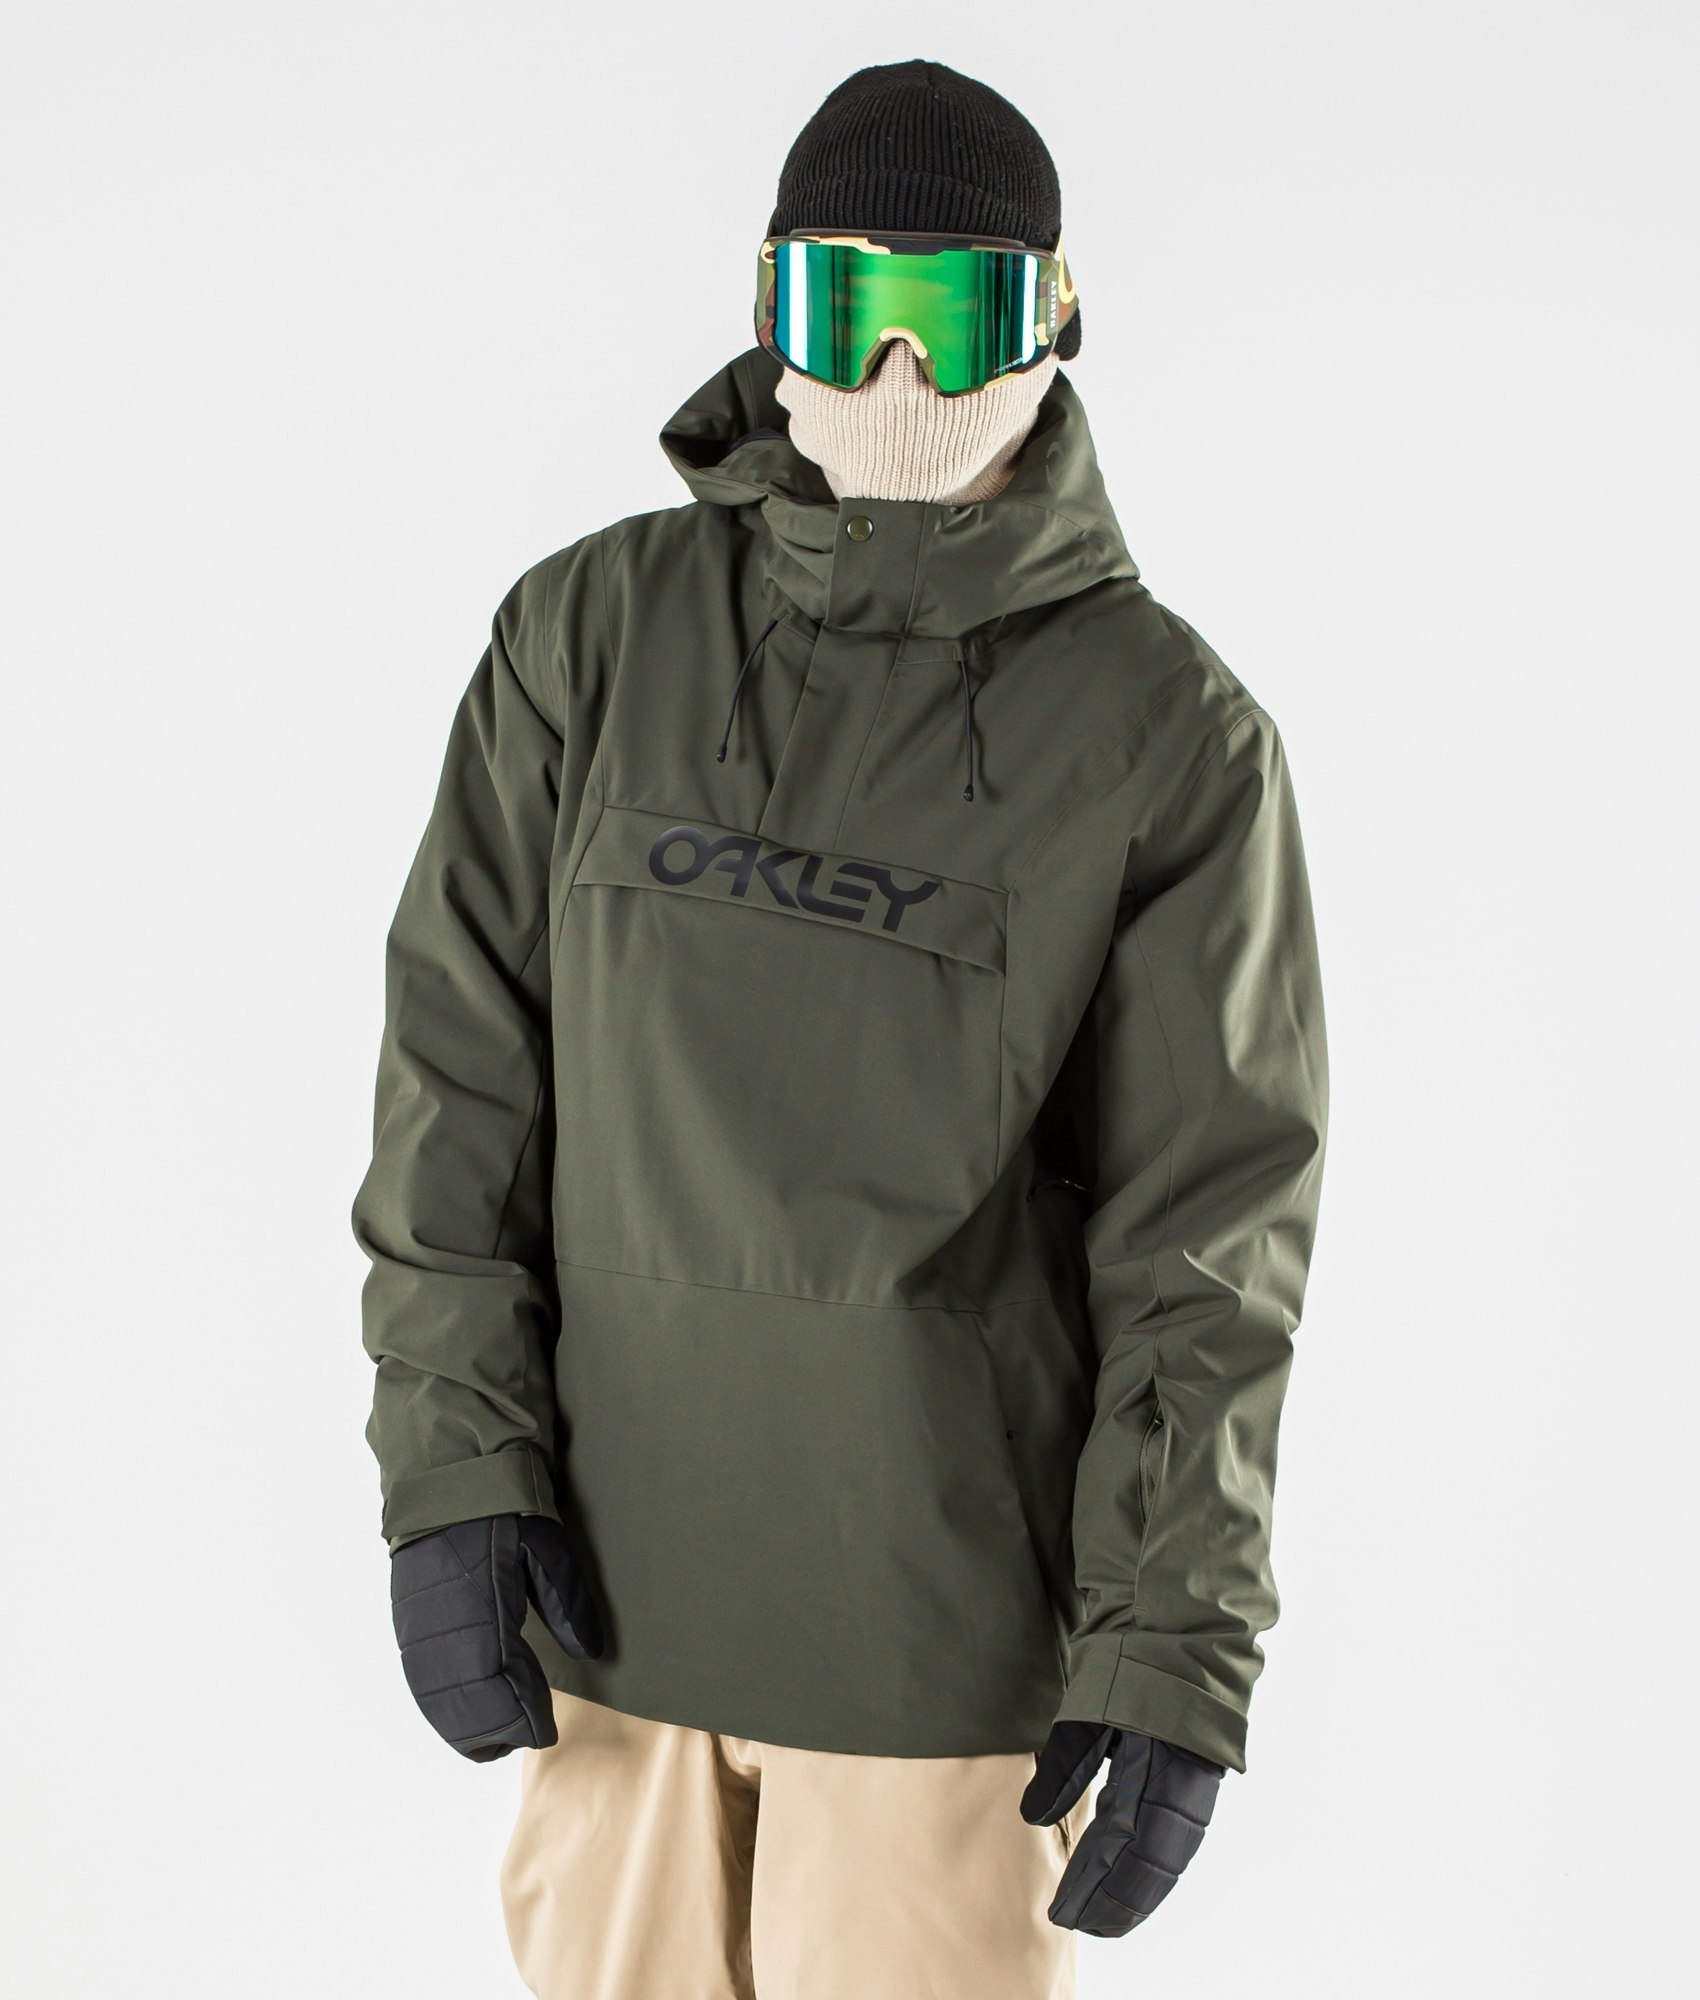 ROMP 2018 900 Anorak Jacket Details about  / Snowboard Jacket 2 types color